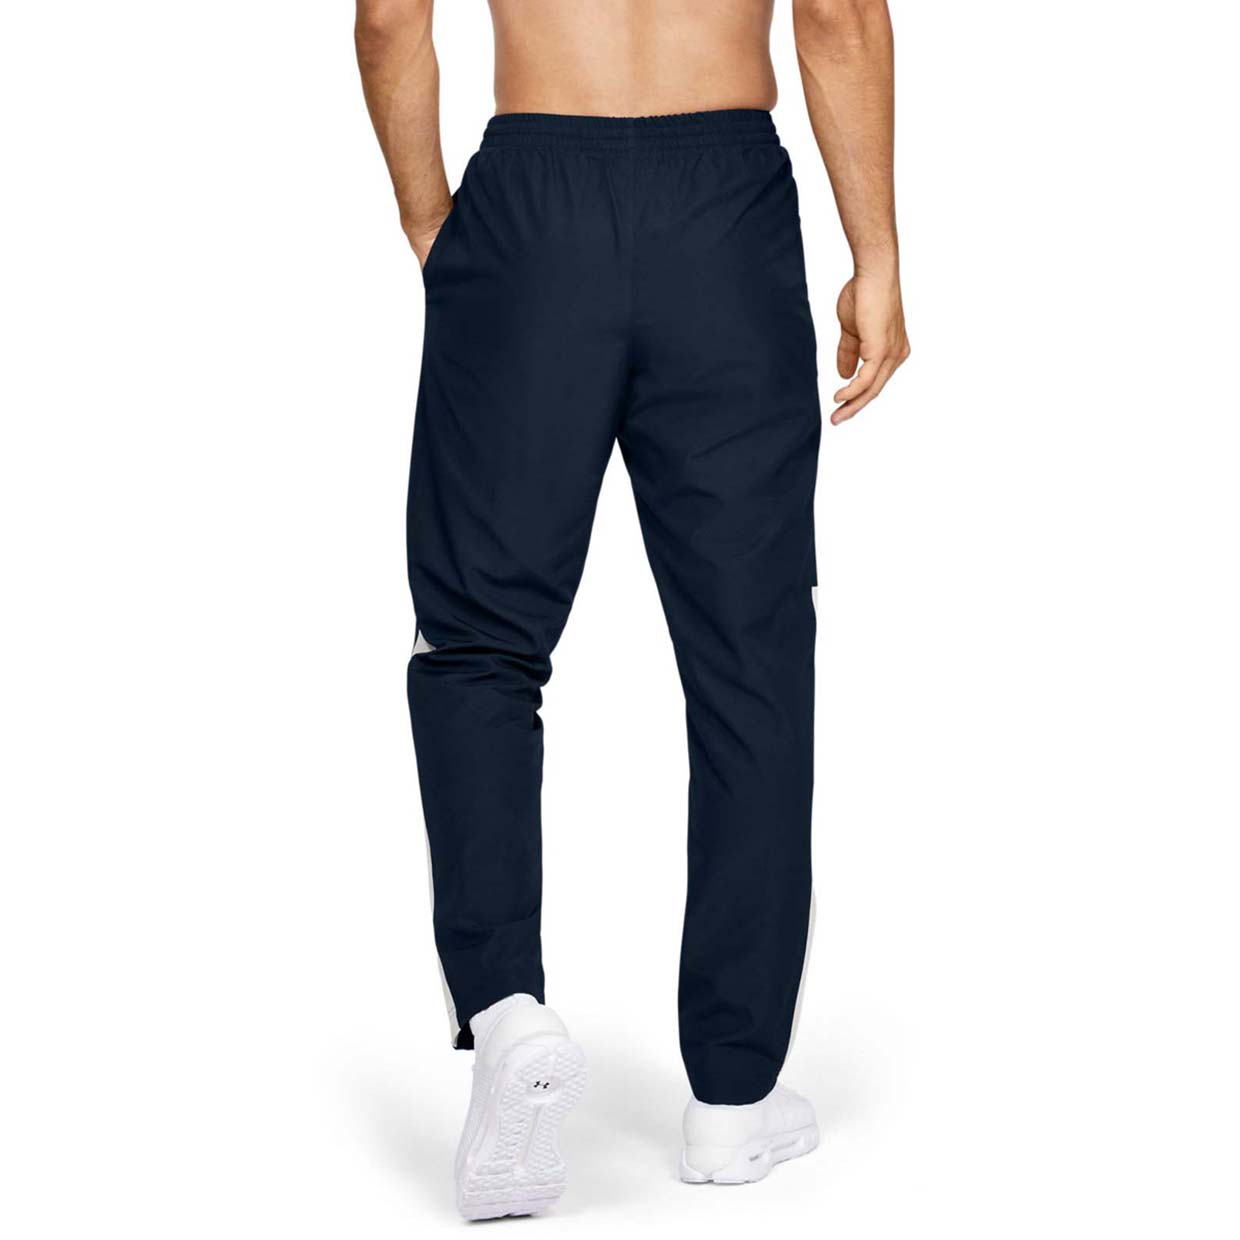 фото Спортивные брюки мужские under armour vital woven pants синие s/m